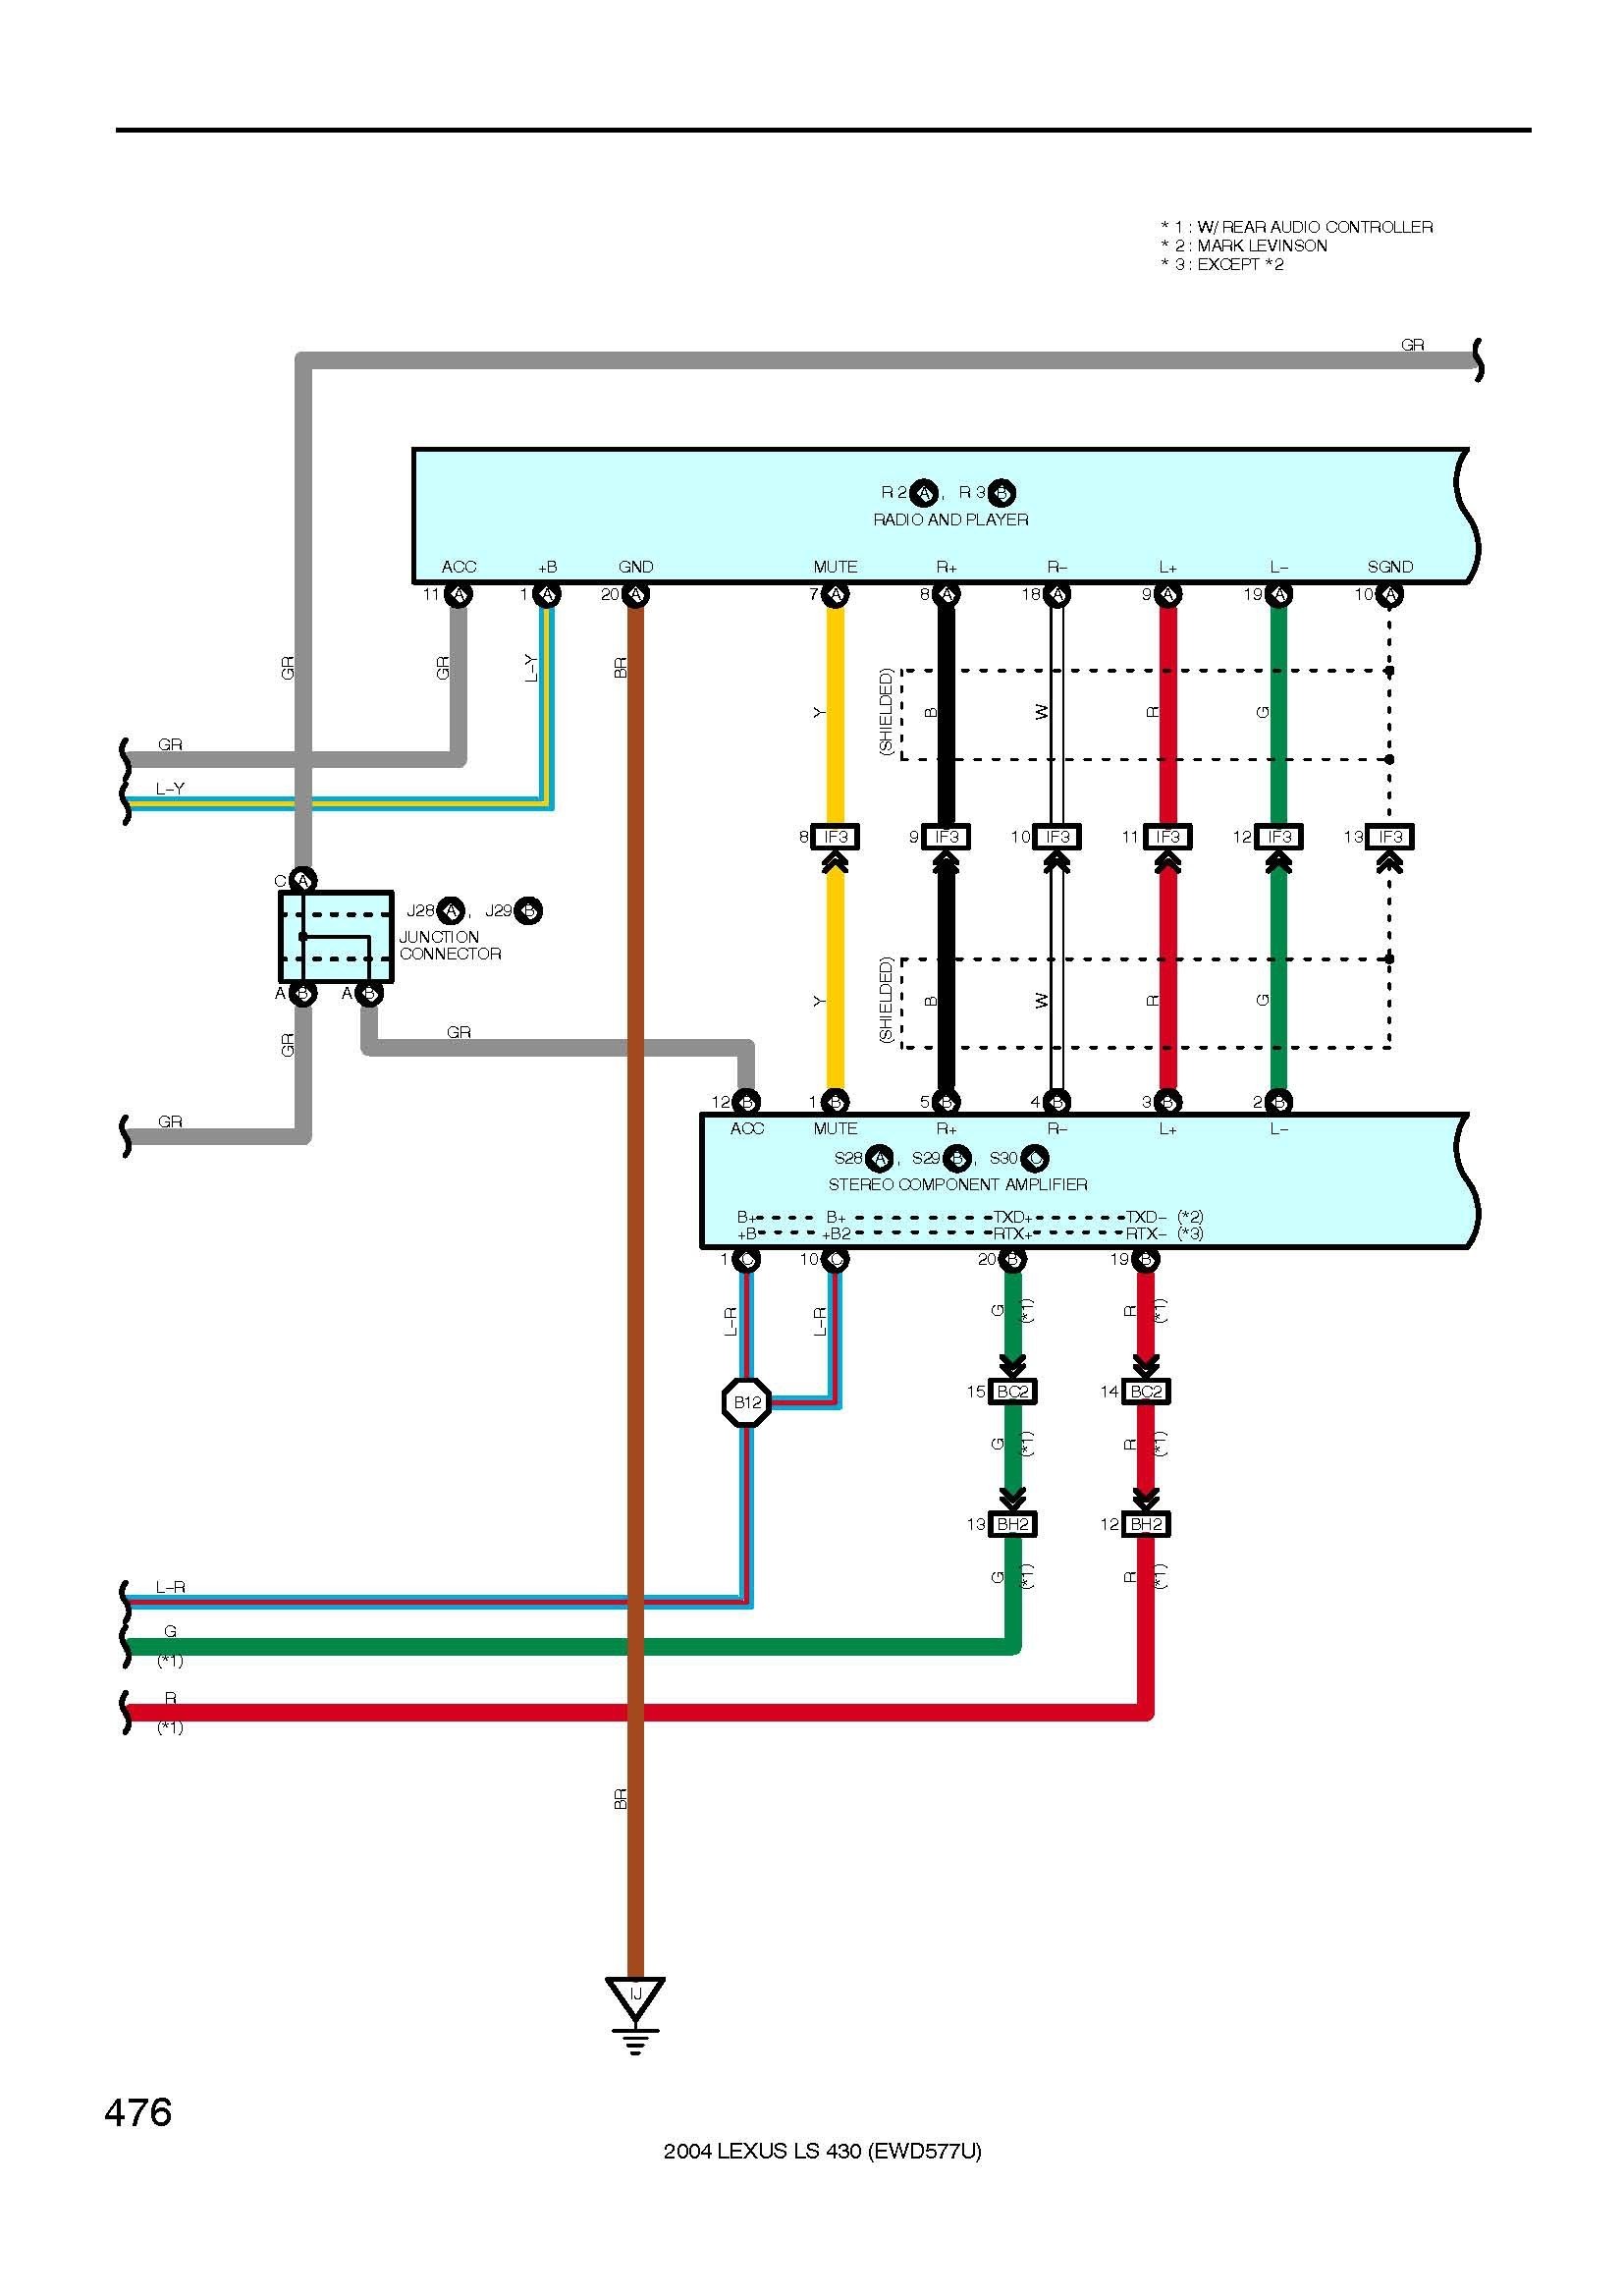 House Wiring Diagram Luxury Amp Wiring Diagram Diagram House Wiring Diagram Electrical Floor Plan 2004